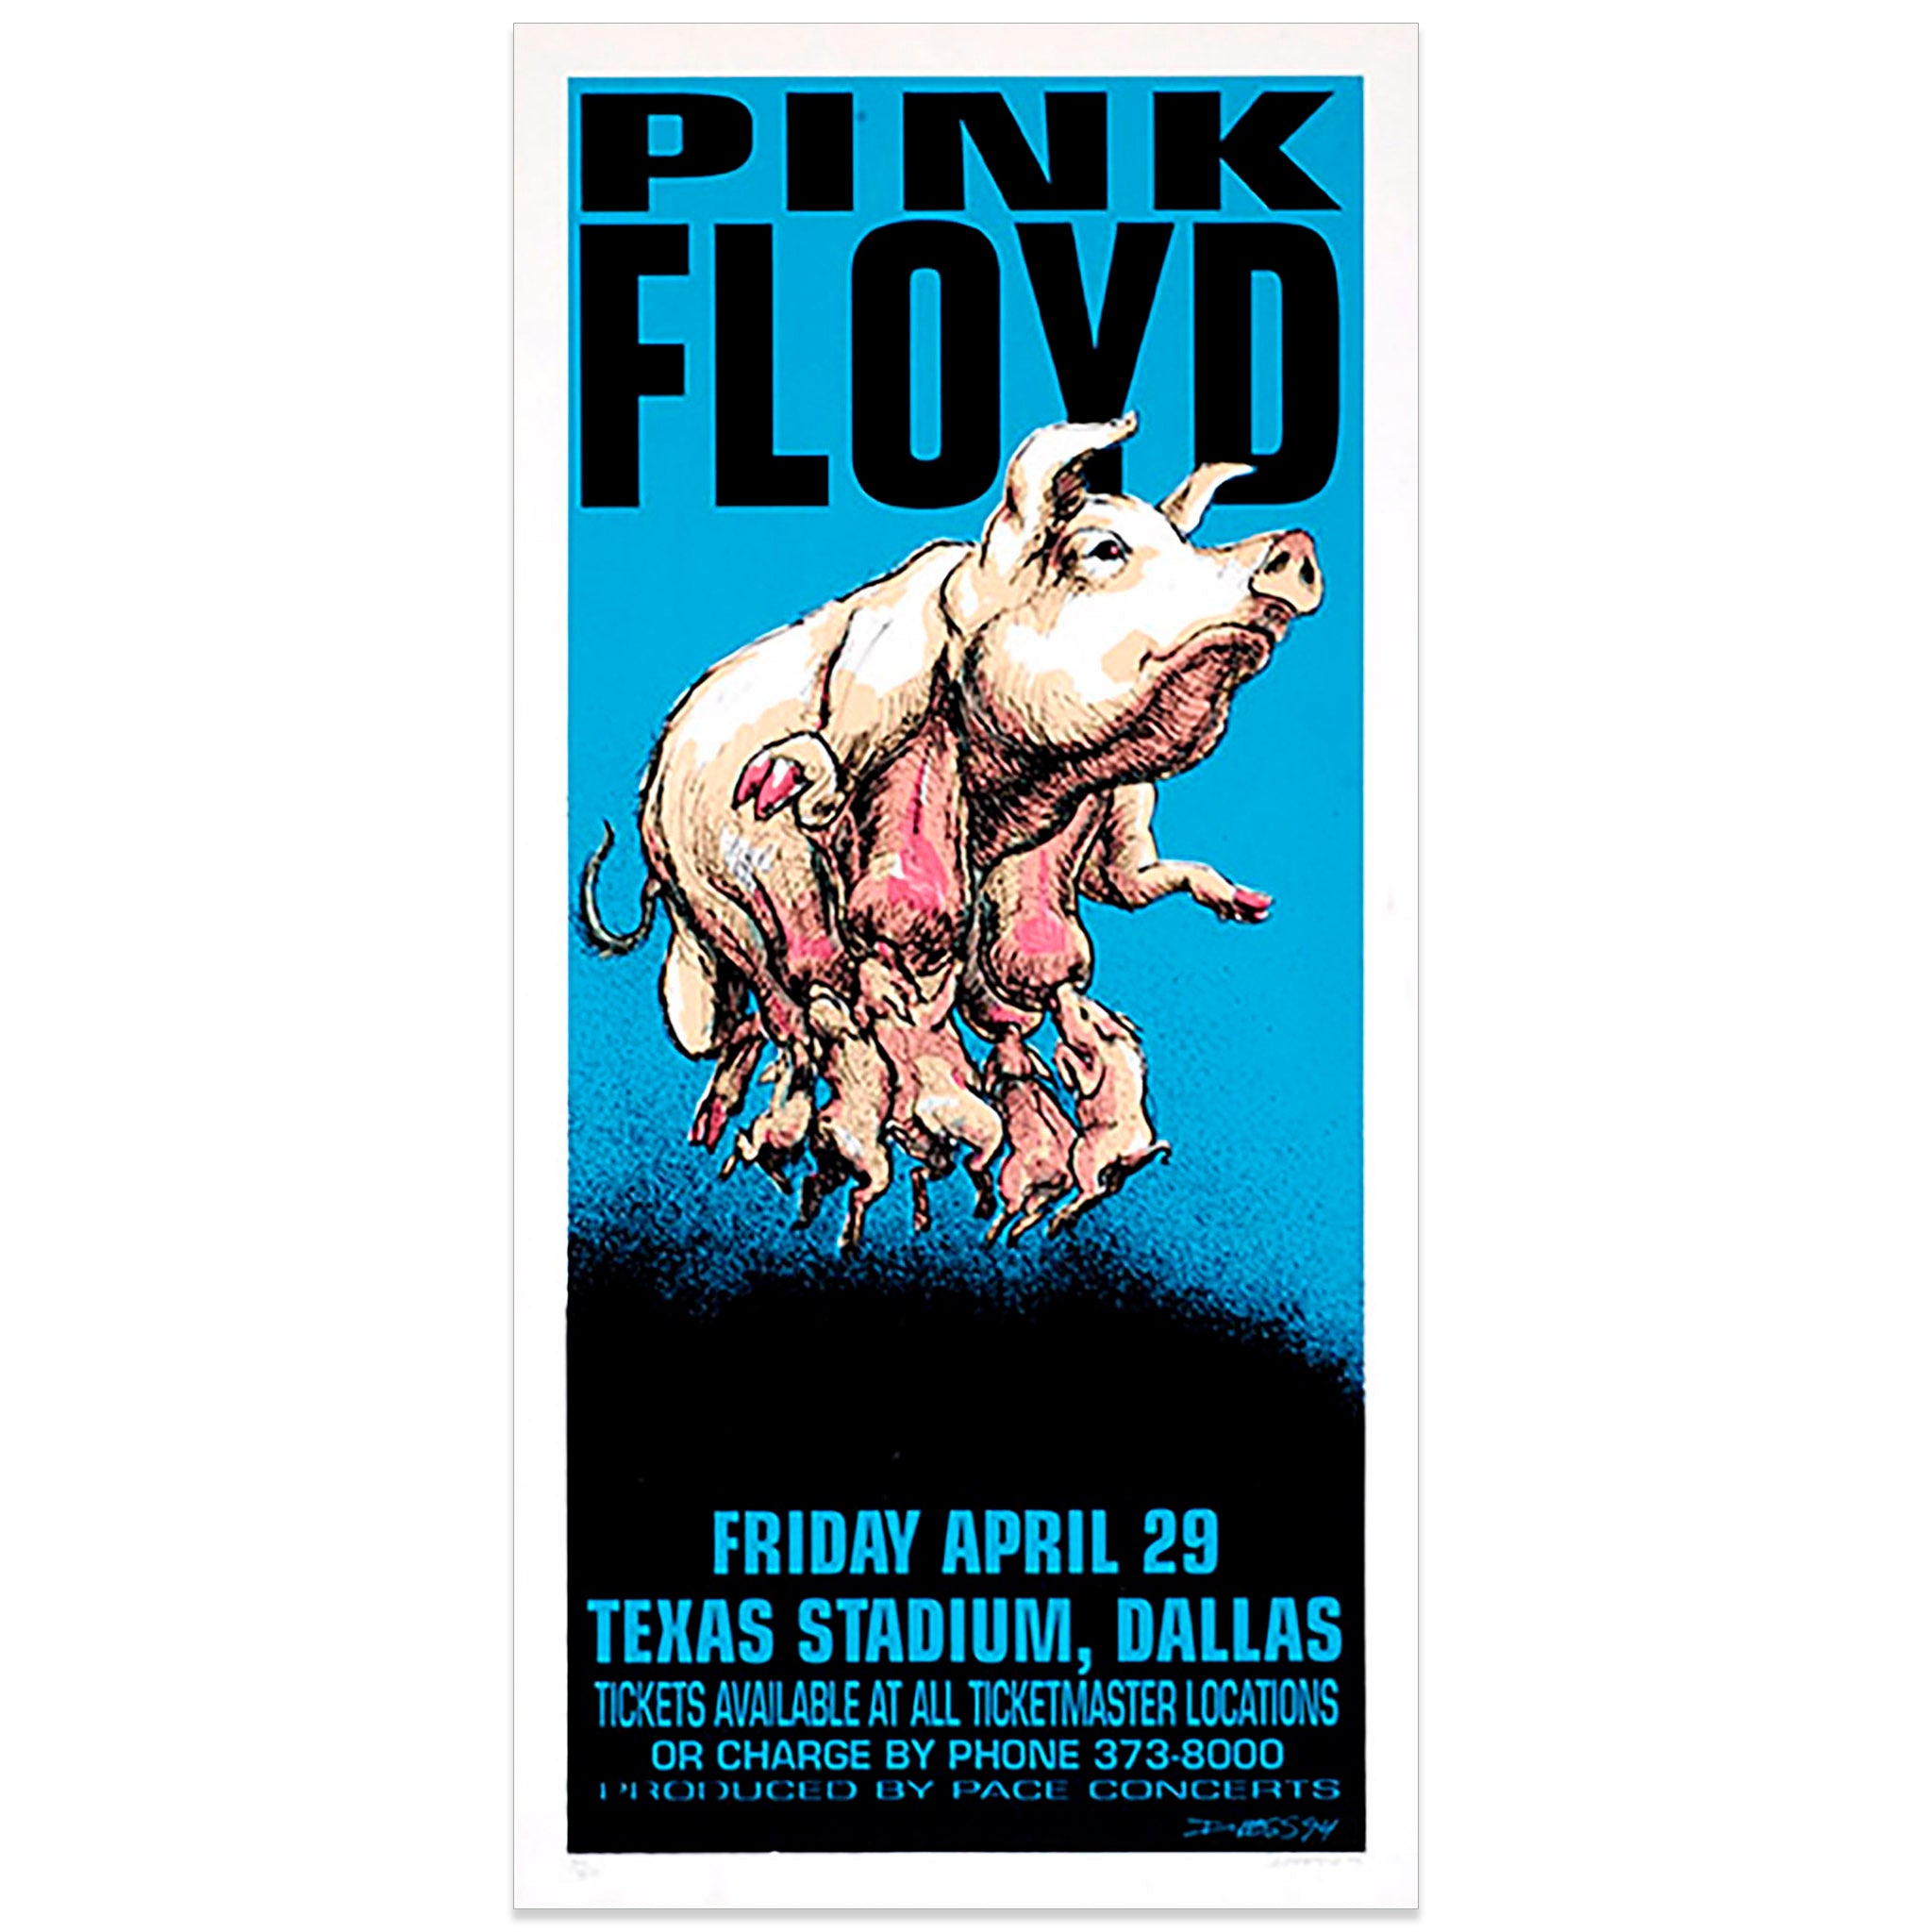 PINK FLOYD POSTER  Pink floyd concert poster, Pink floyd poster